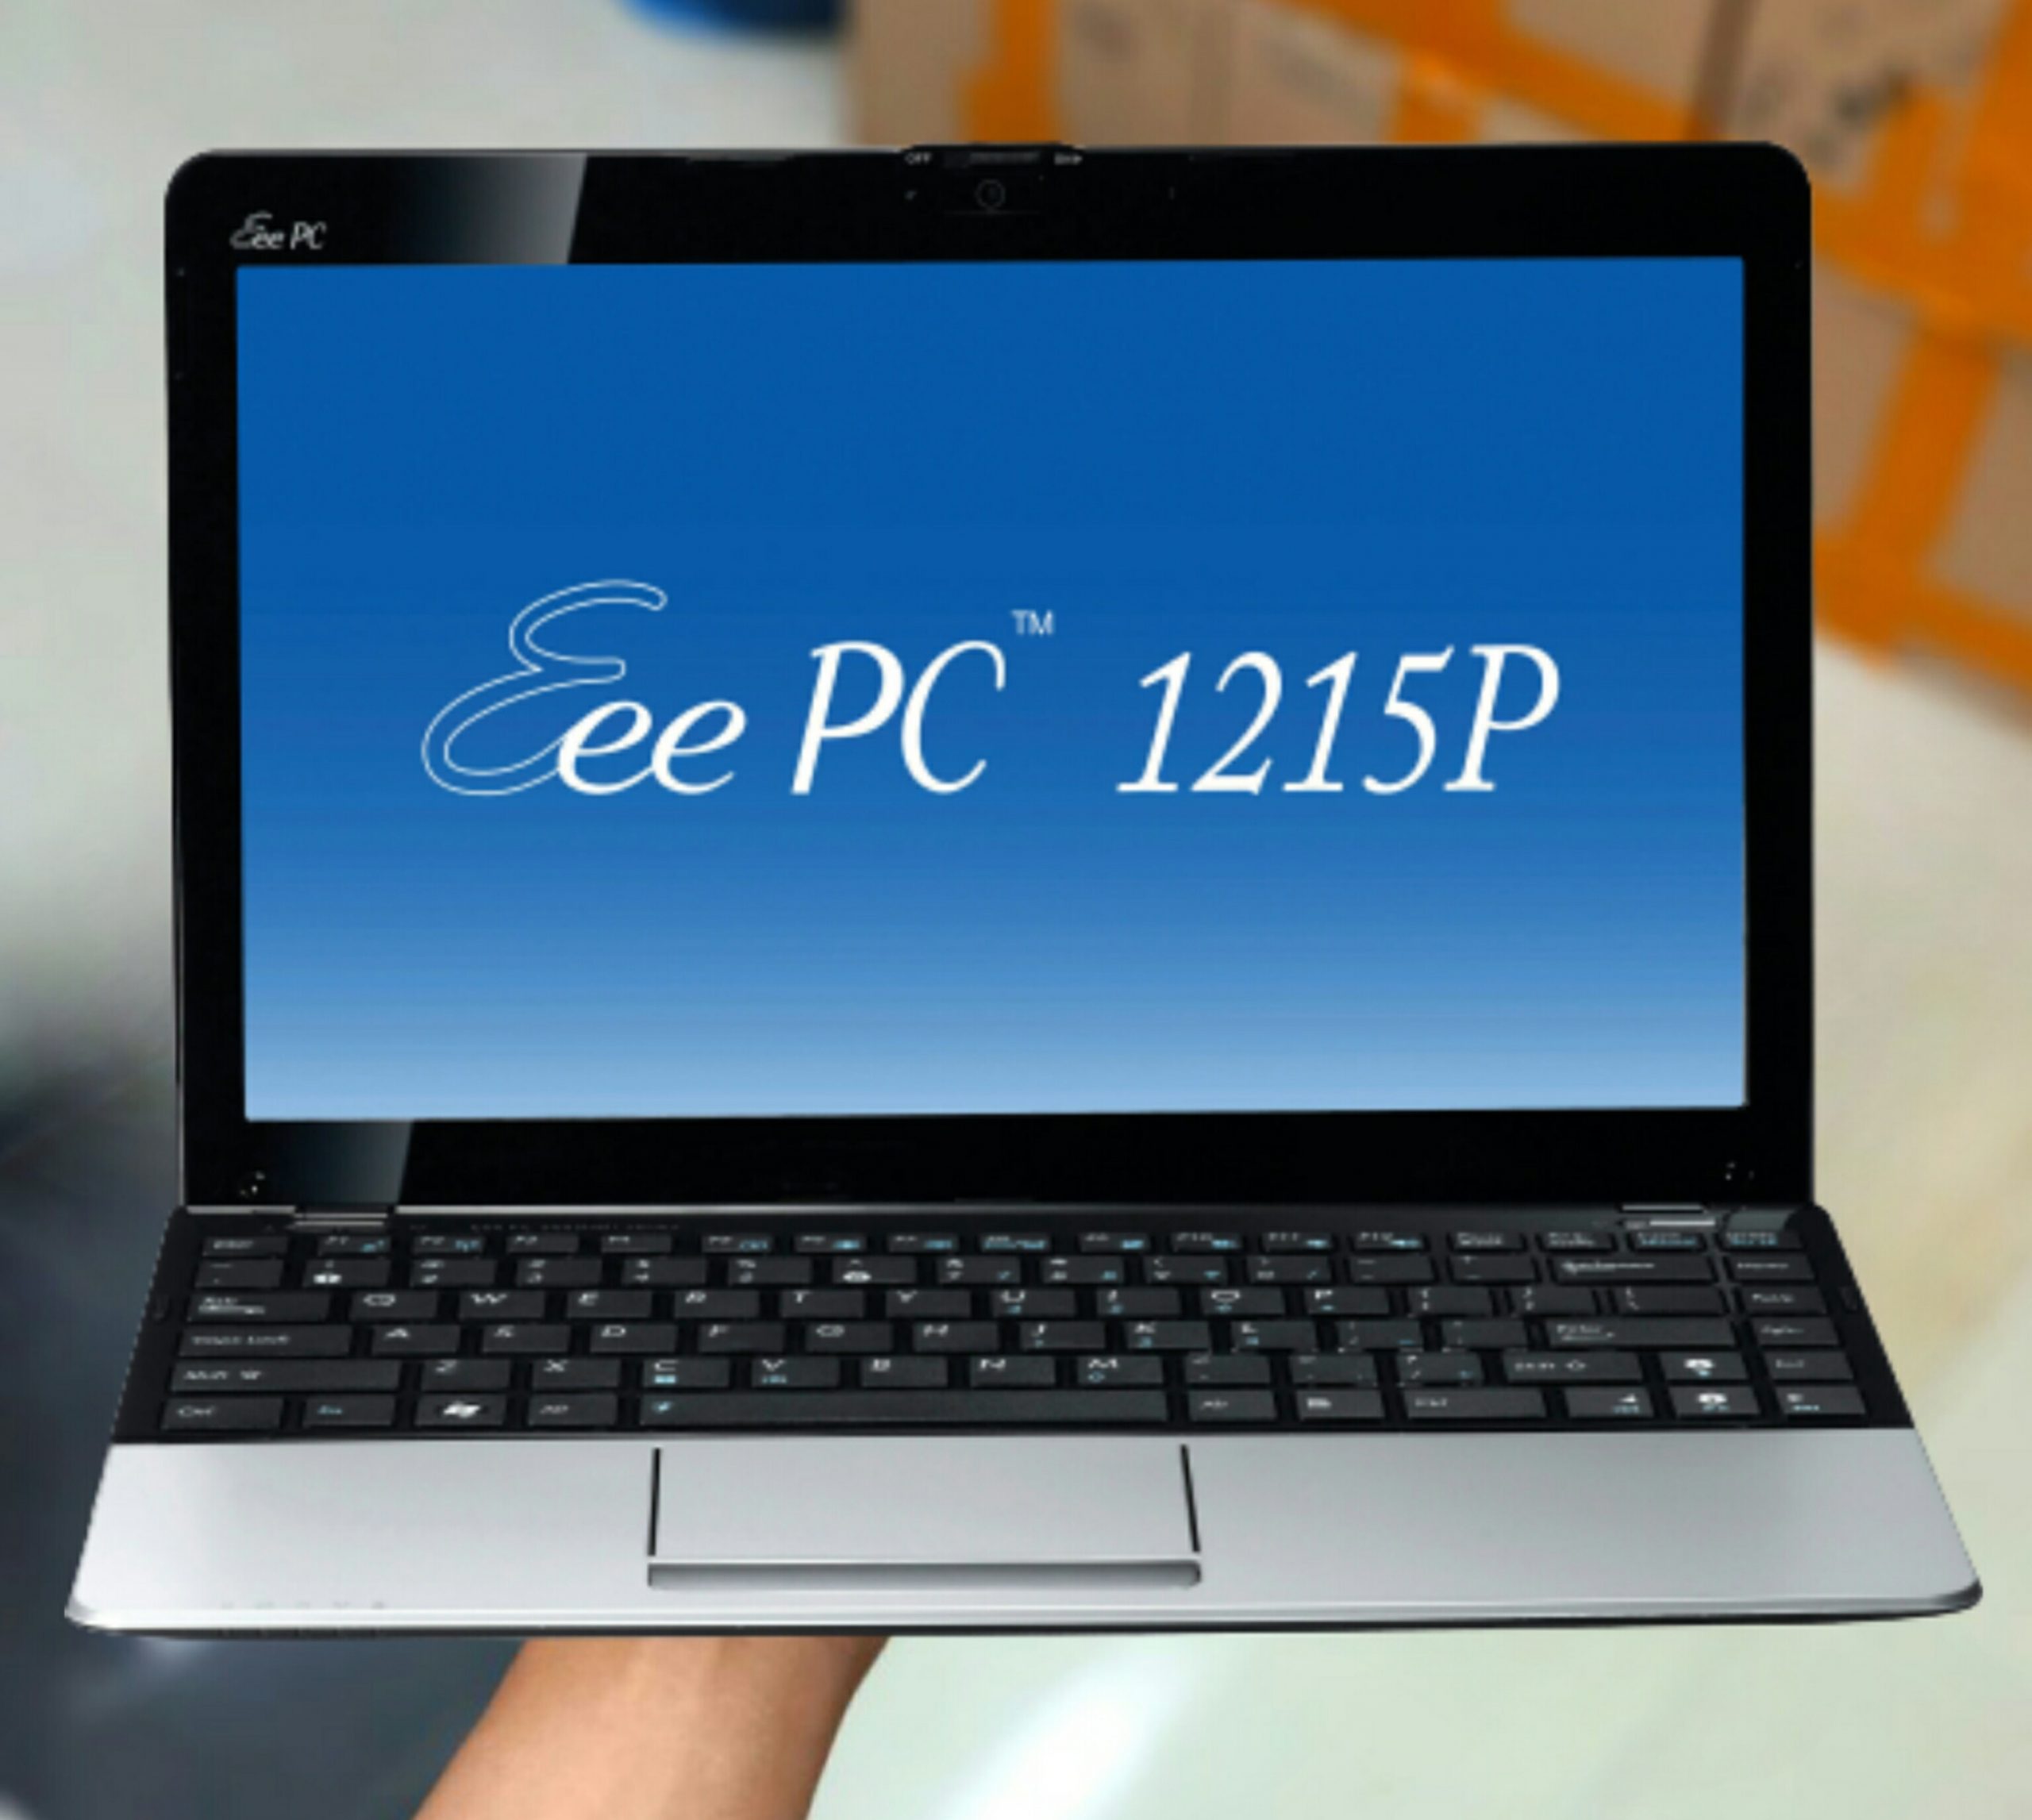 Asus Mini Eee PC 1215P Laptop Price in Pakistan